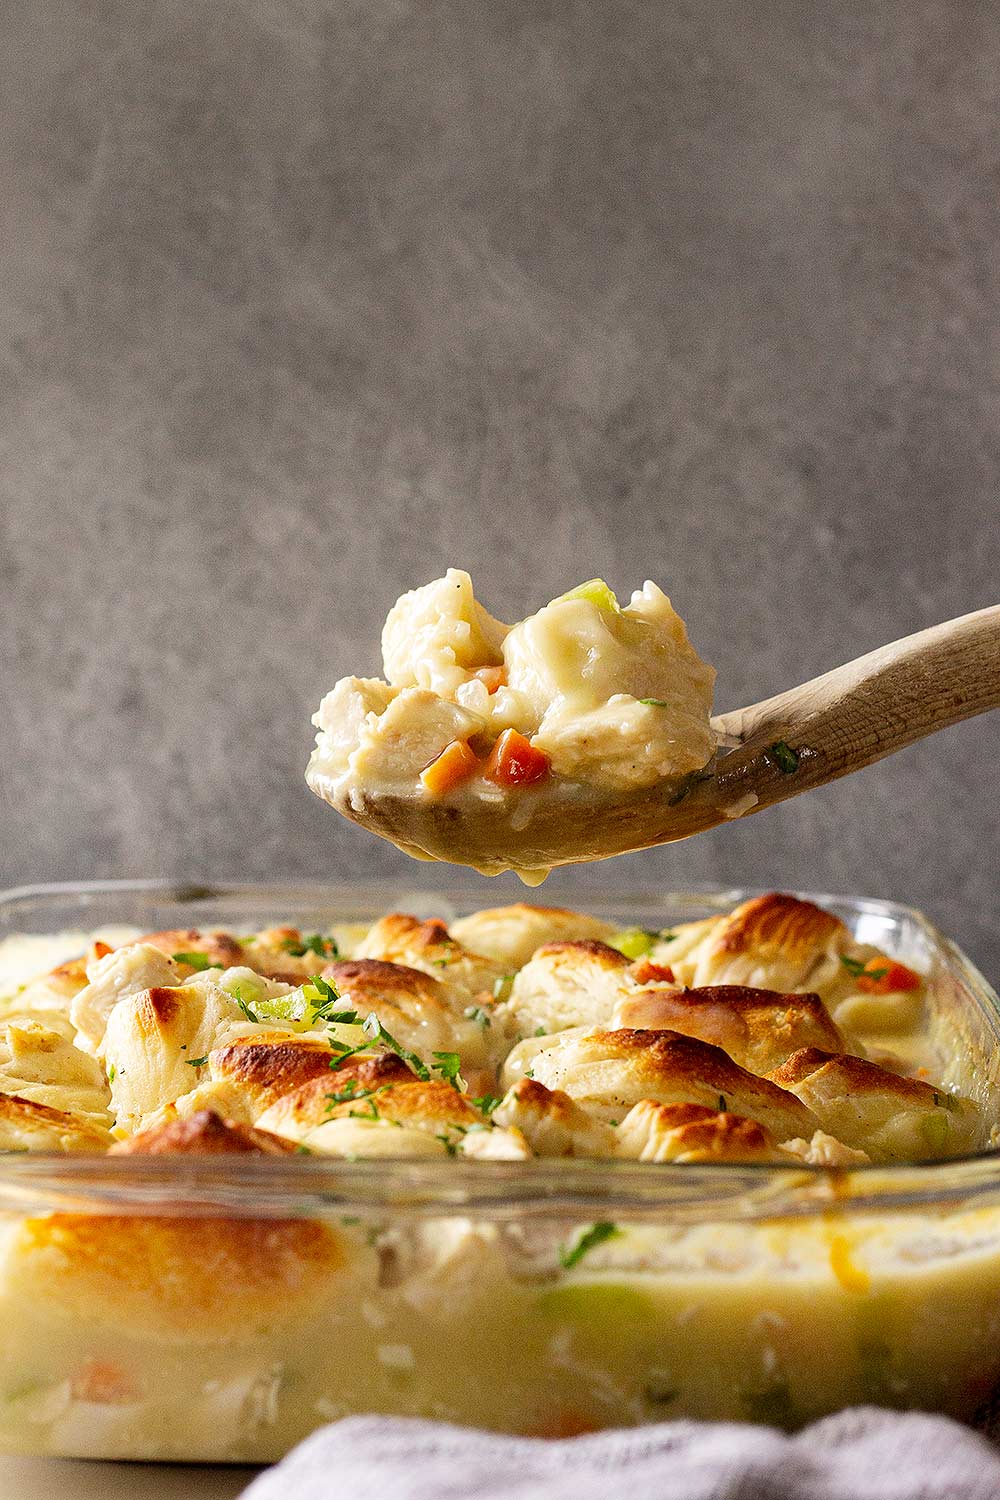 Chicken and dumpling casserole recipe scooped on wooden spoon